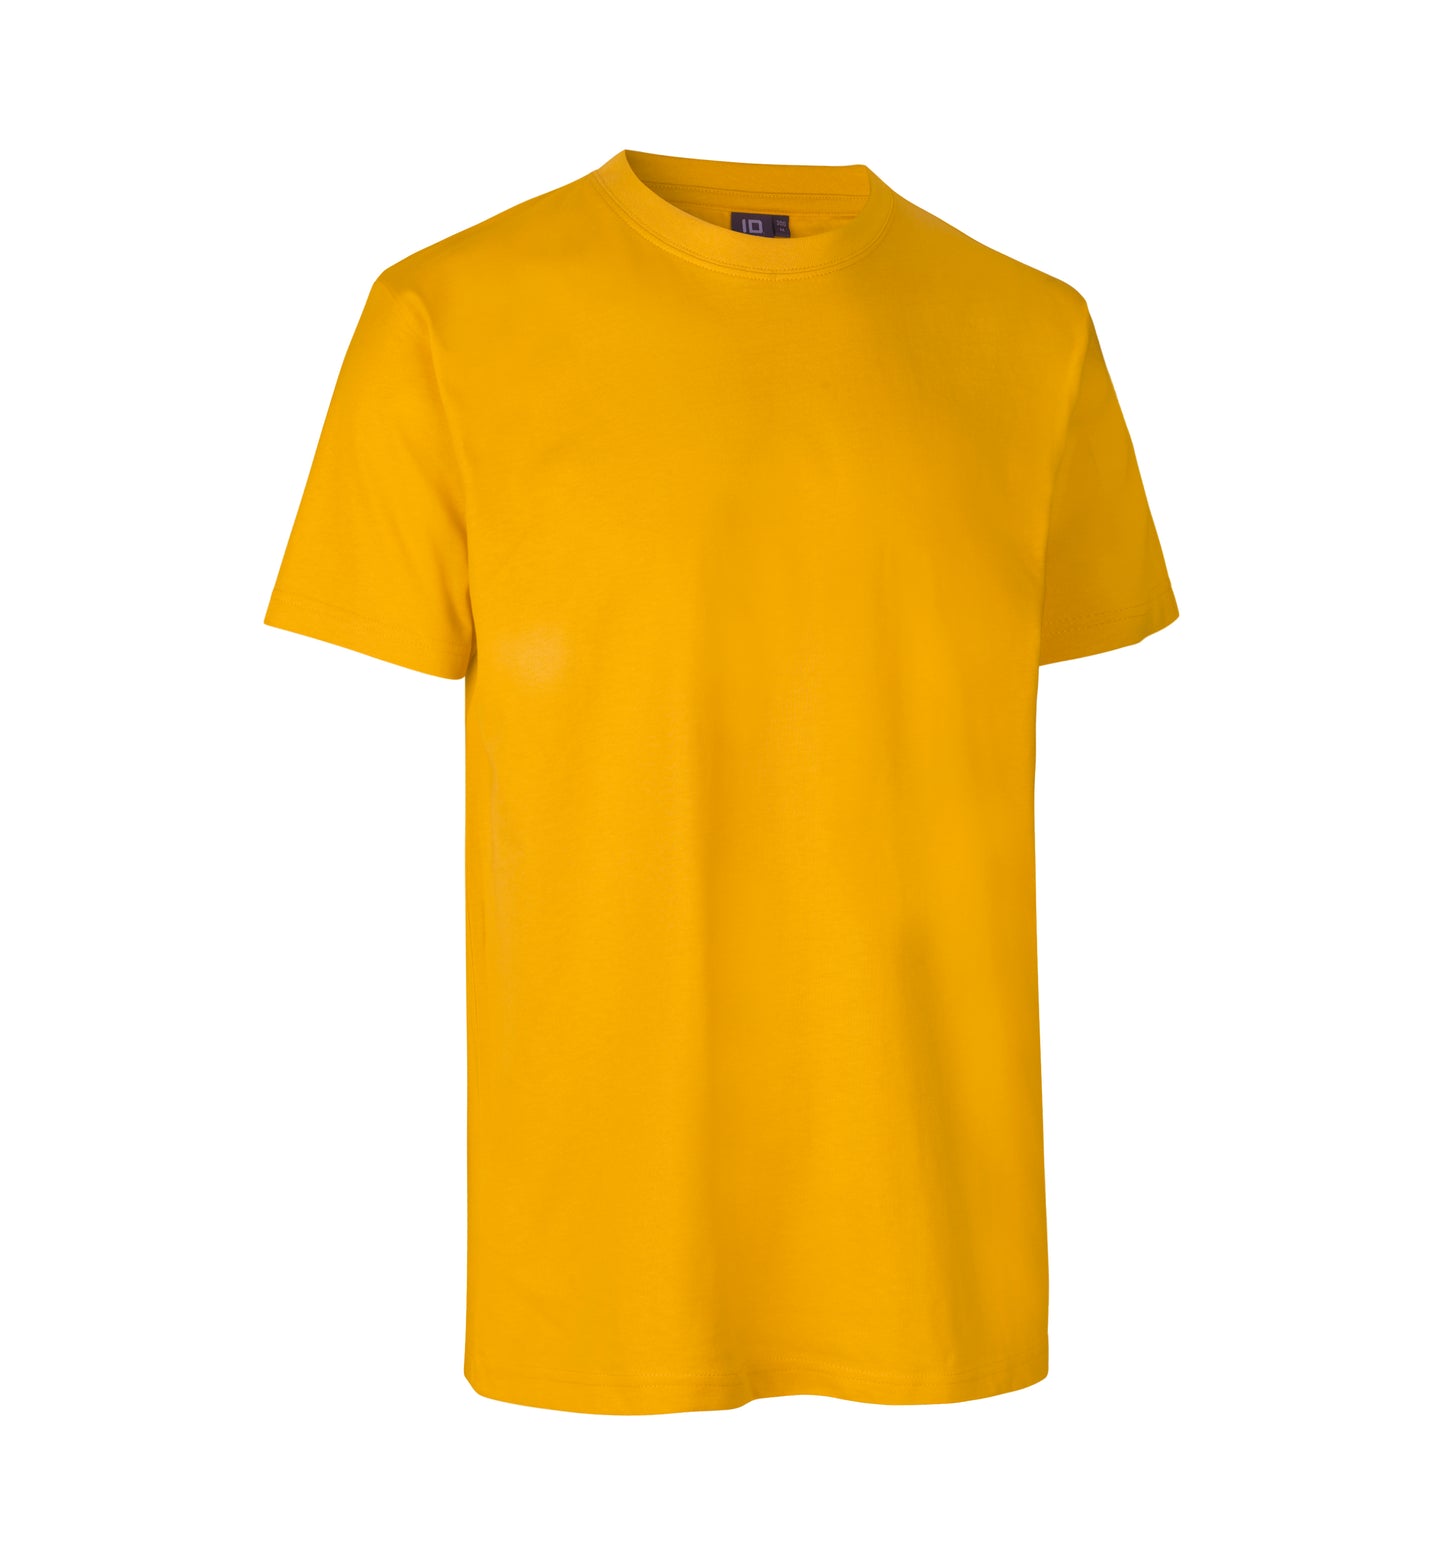 ID GAME® T-Shirt 0500 (Privatverkauf)